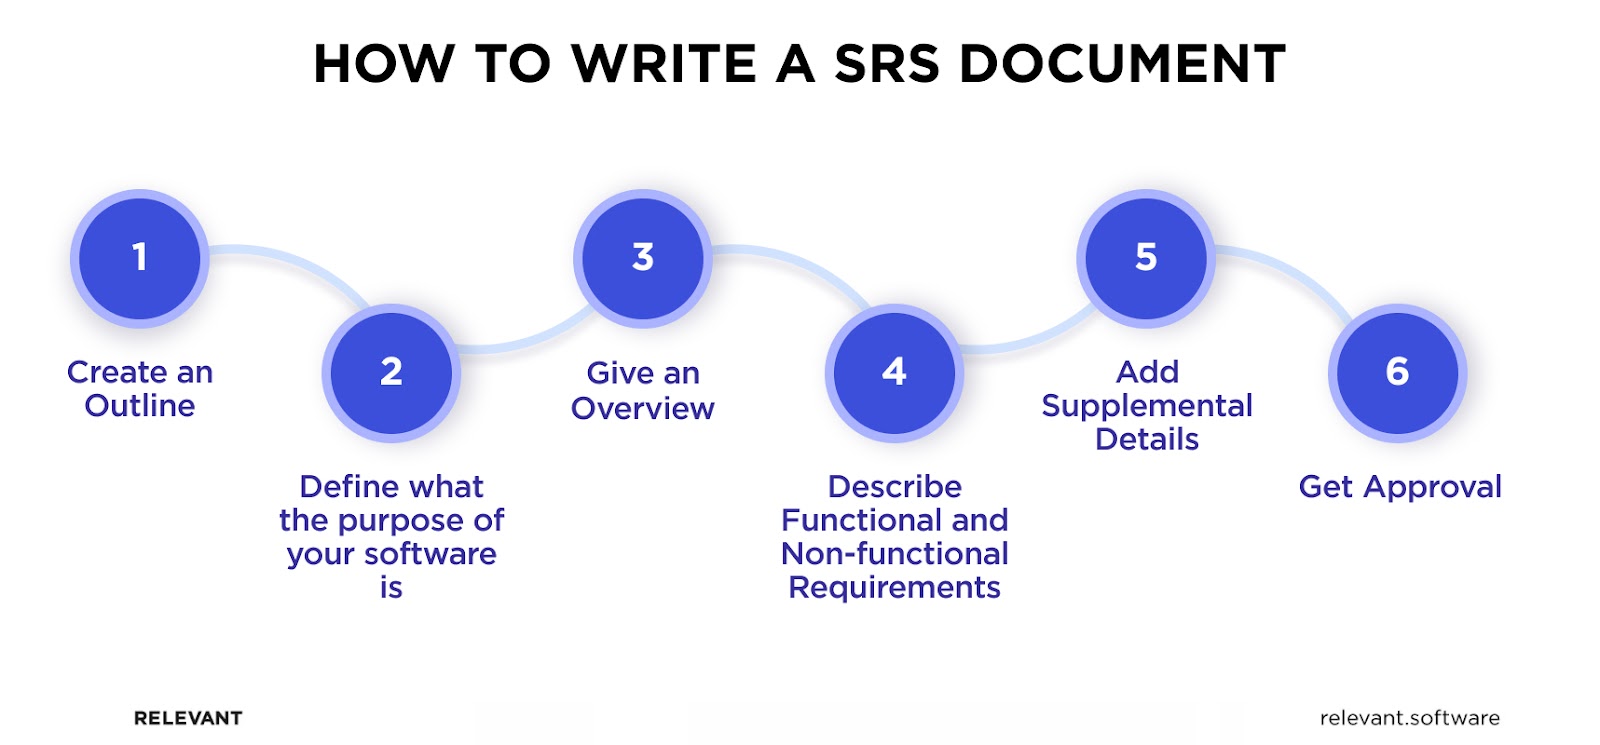 Steps to write a SRS document